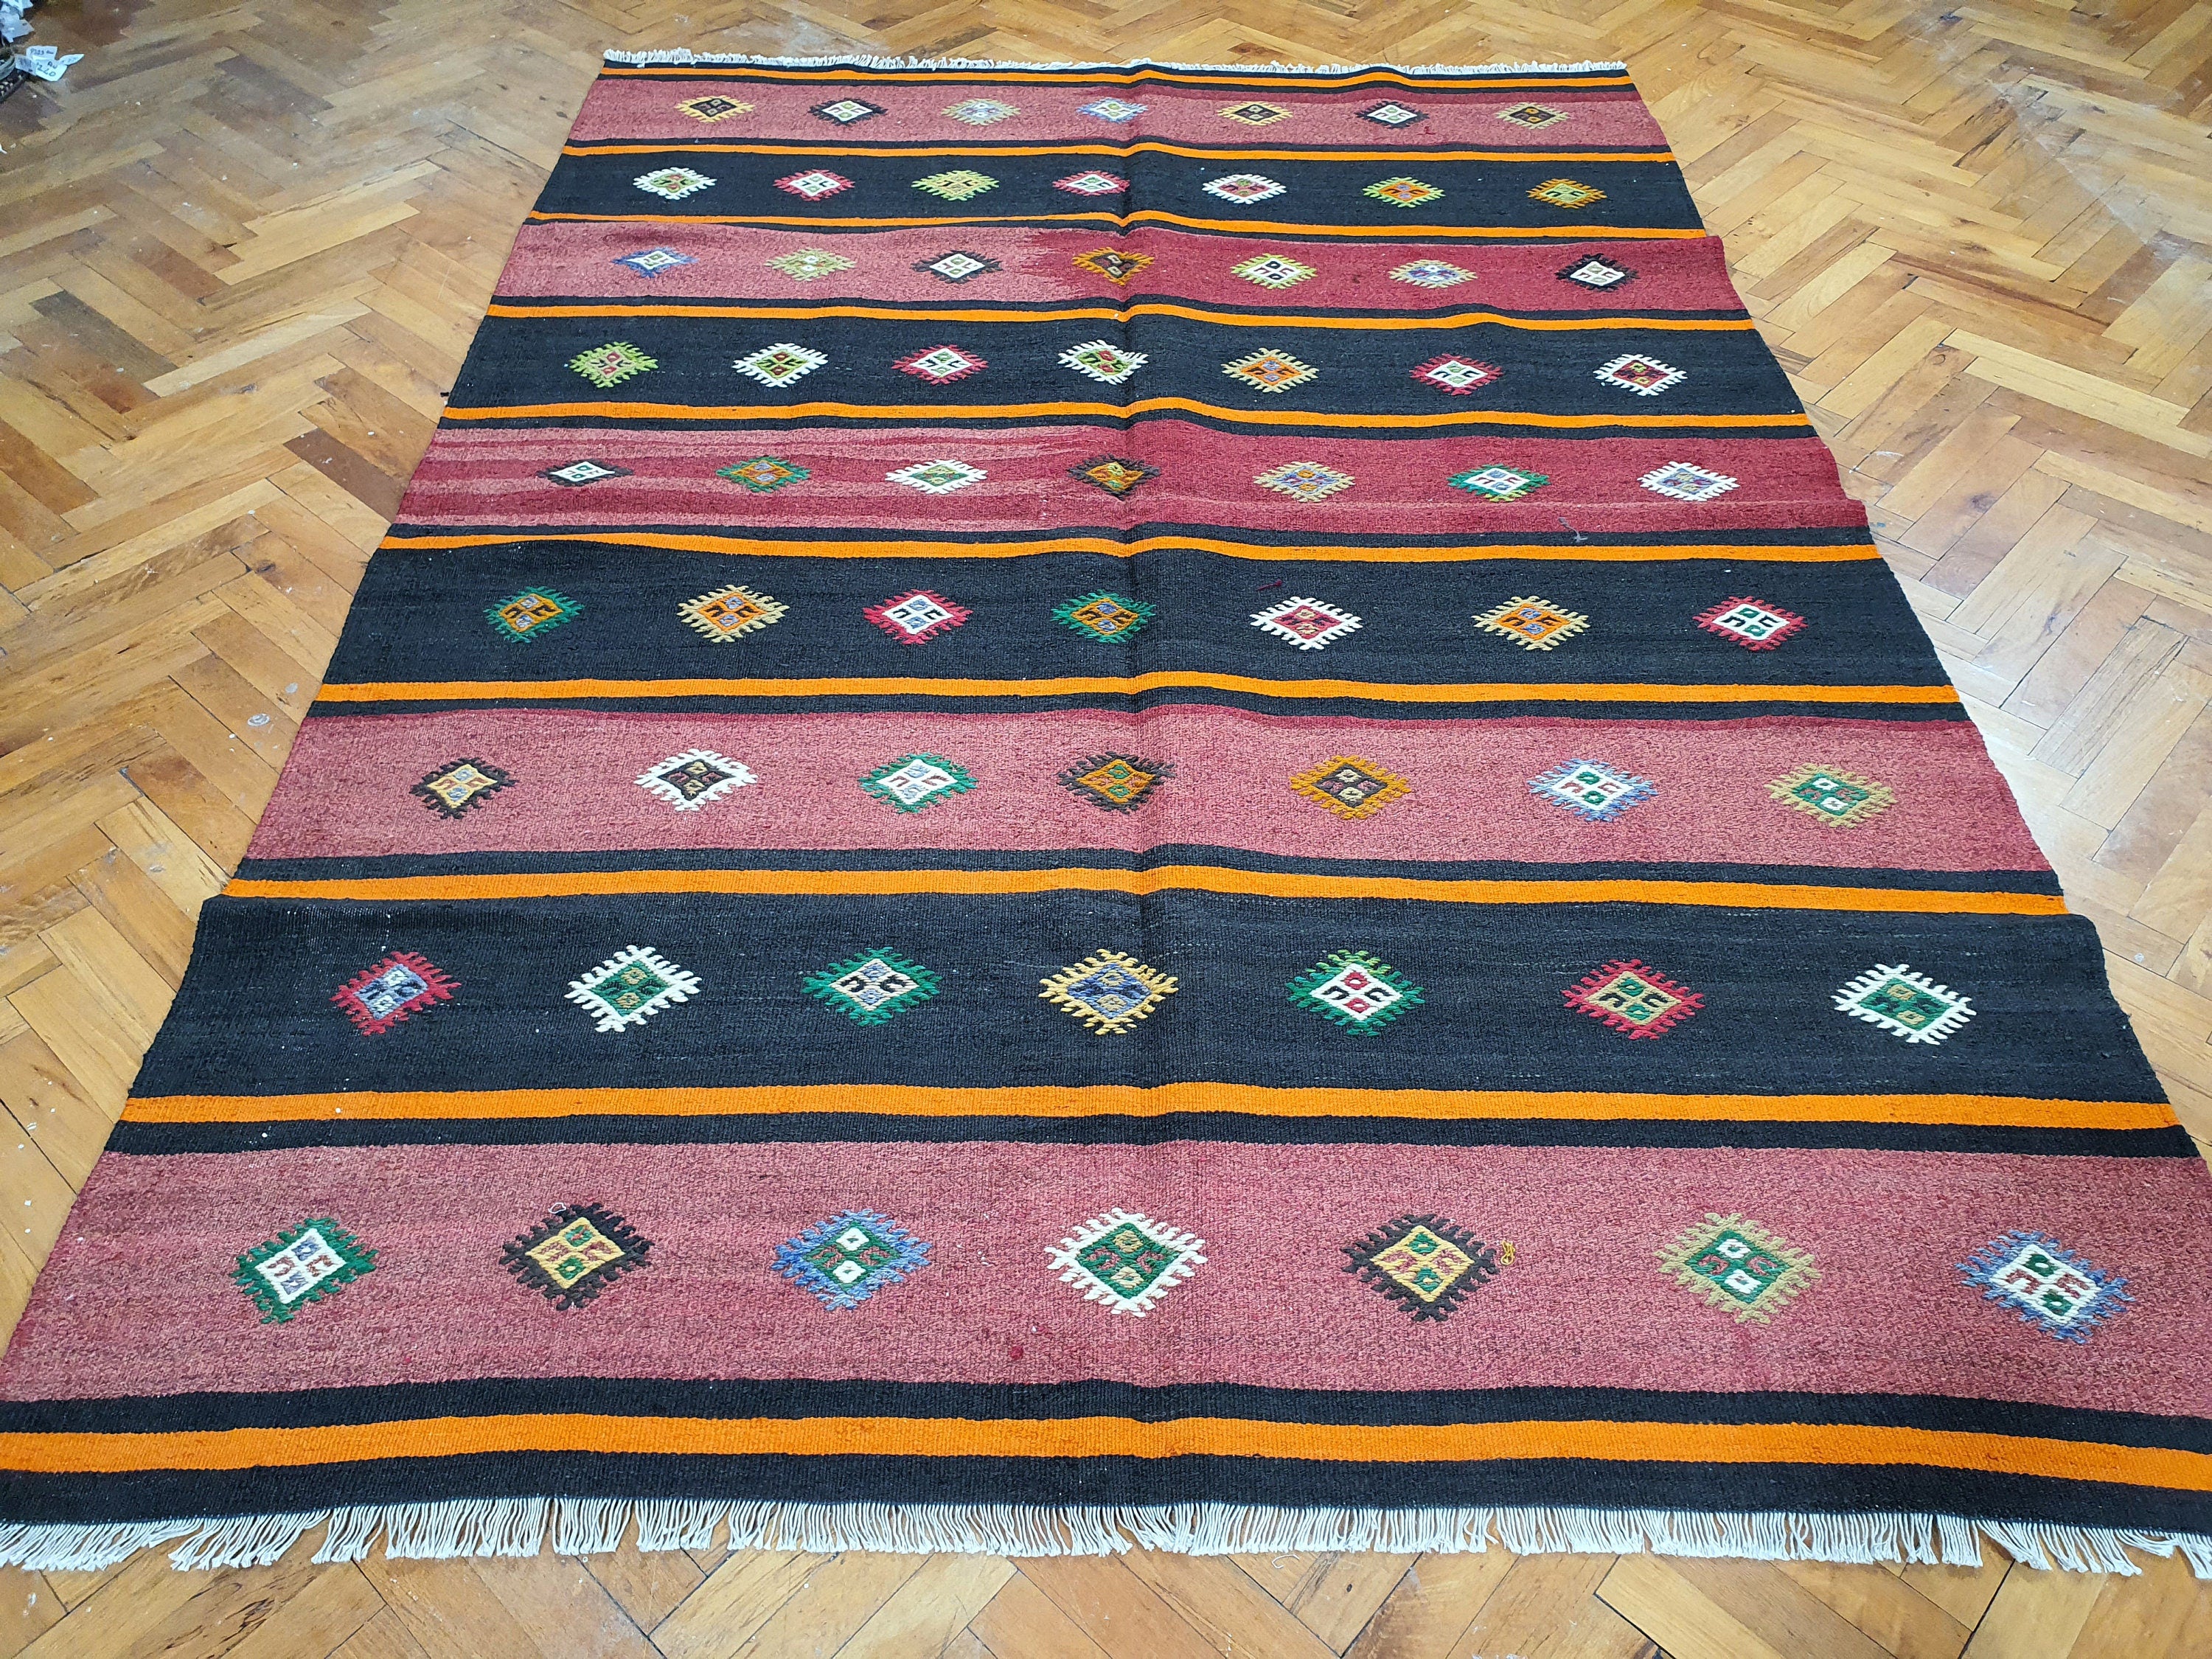 Vintage Decor Retro Rug, Persian Area Kilim Living Room Rug, Moroccan Style Handmade Wool Rug, Colorful Turkish Rustic Boho Rug 5'6'x '8' ft